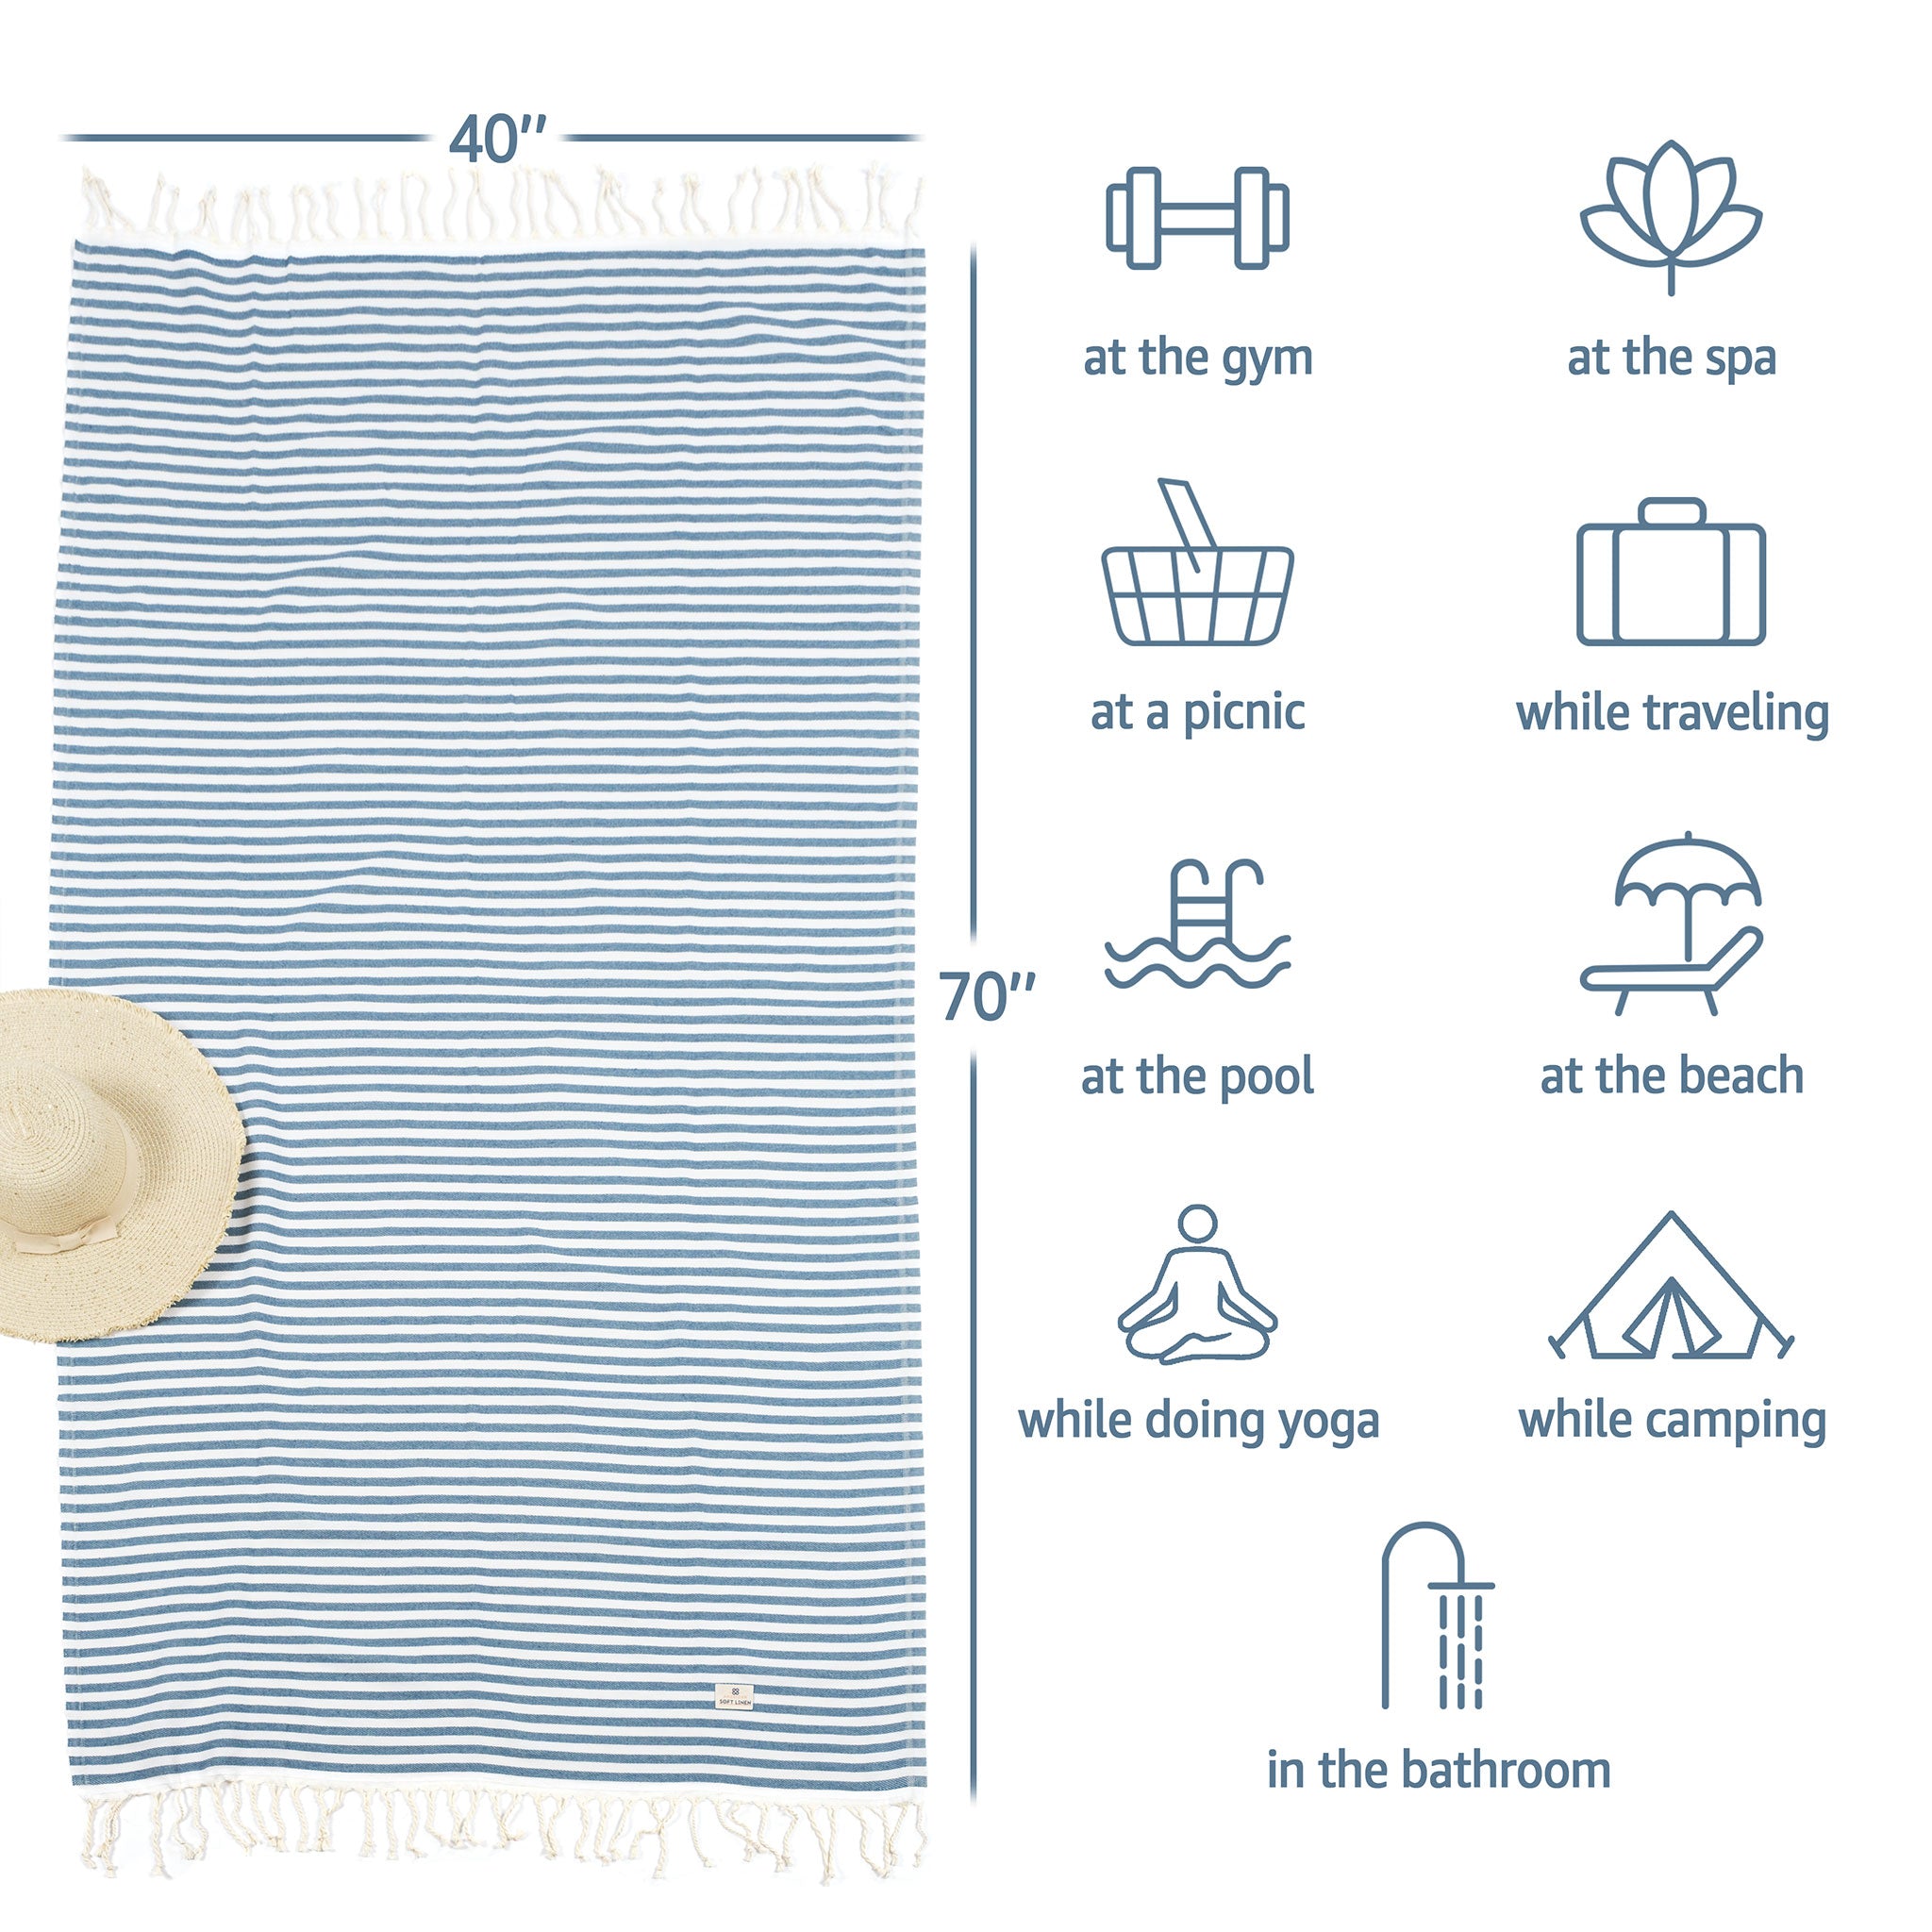 American Soft Linen - 100% Cotton Turkish Peshtemal Towels 40x70 Inches - Petrol-Blue - 4